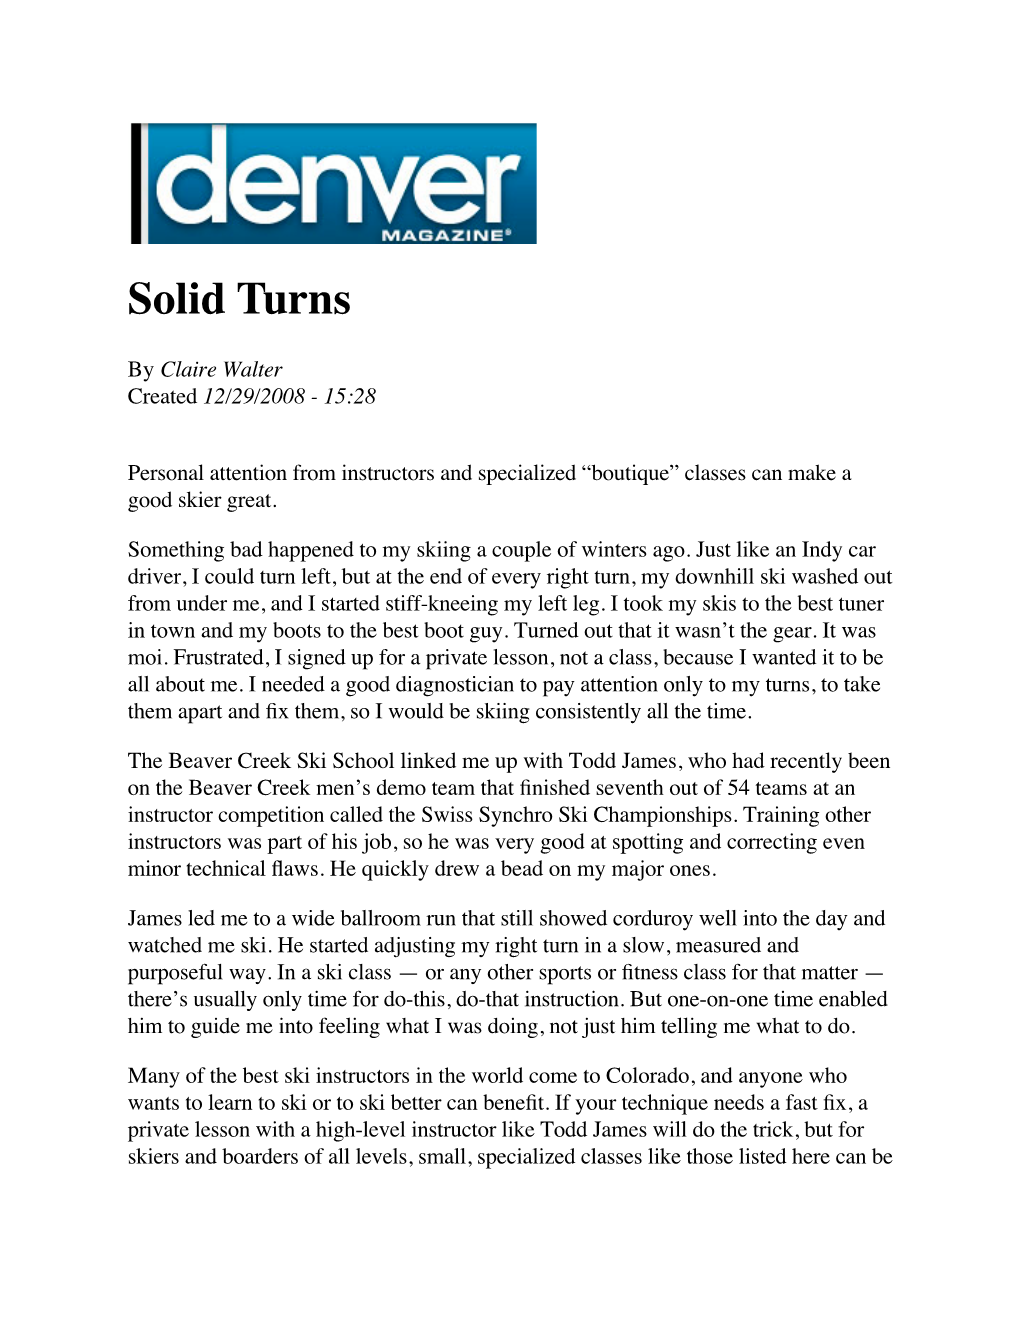 Denver Magazine – Solid Turns